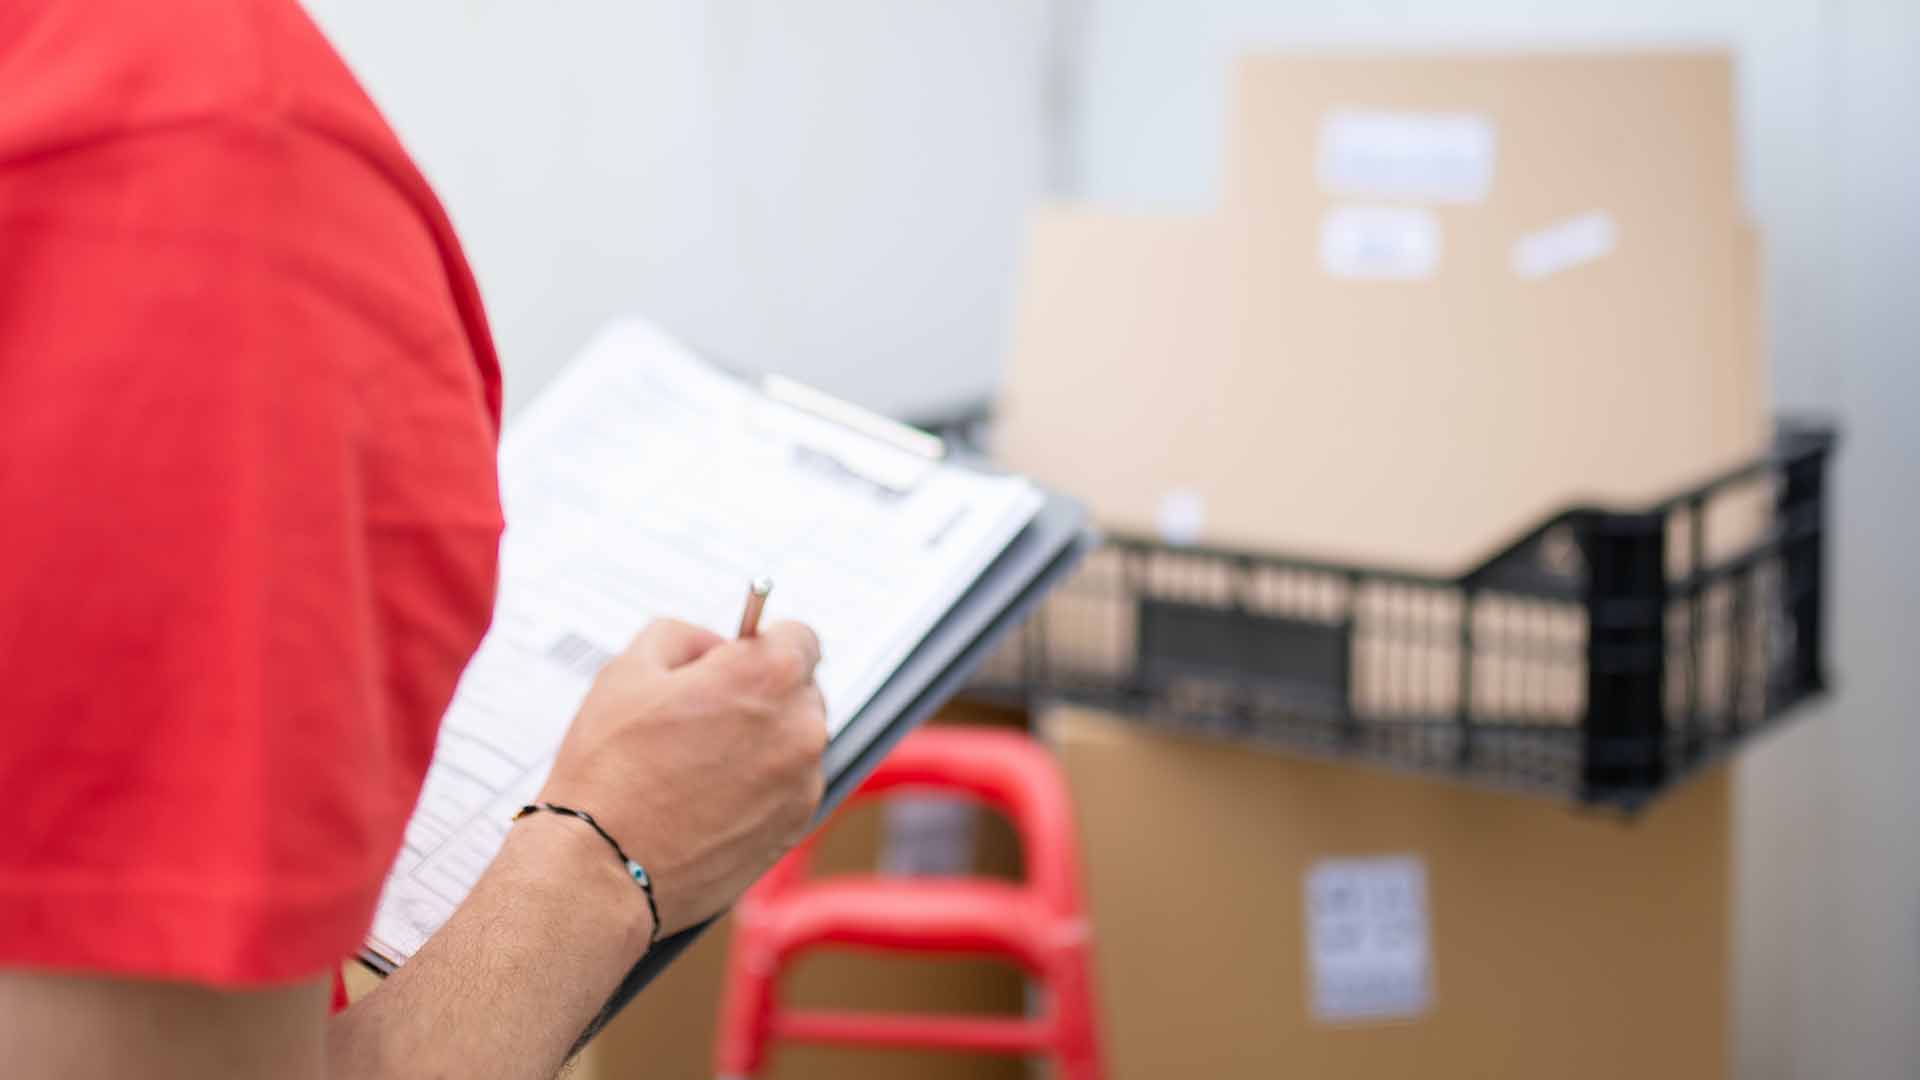 A warehouse worker checks a printed pick list